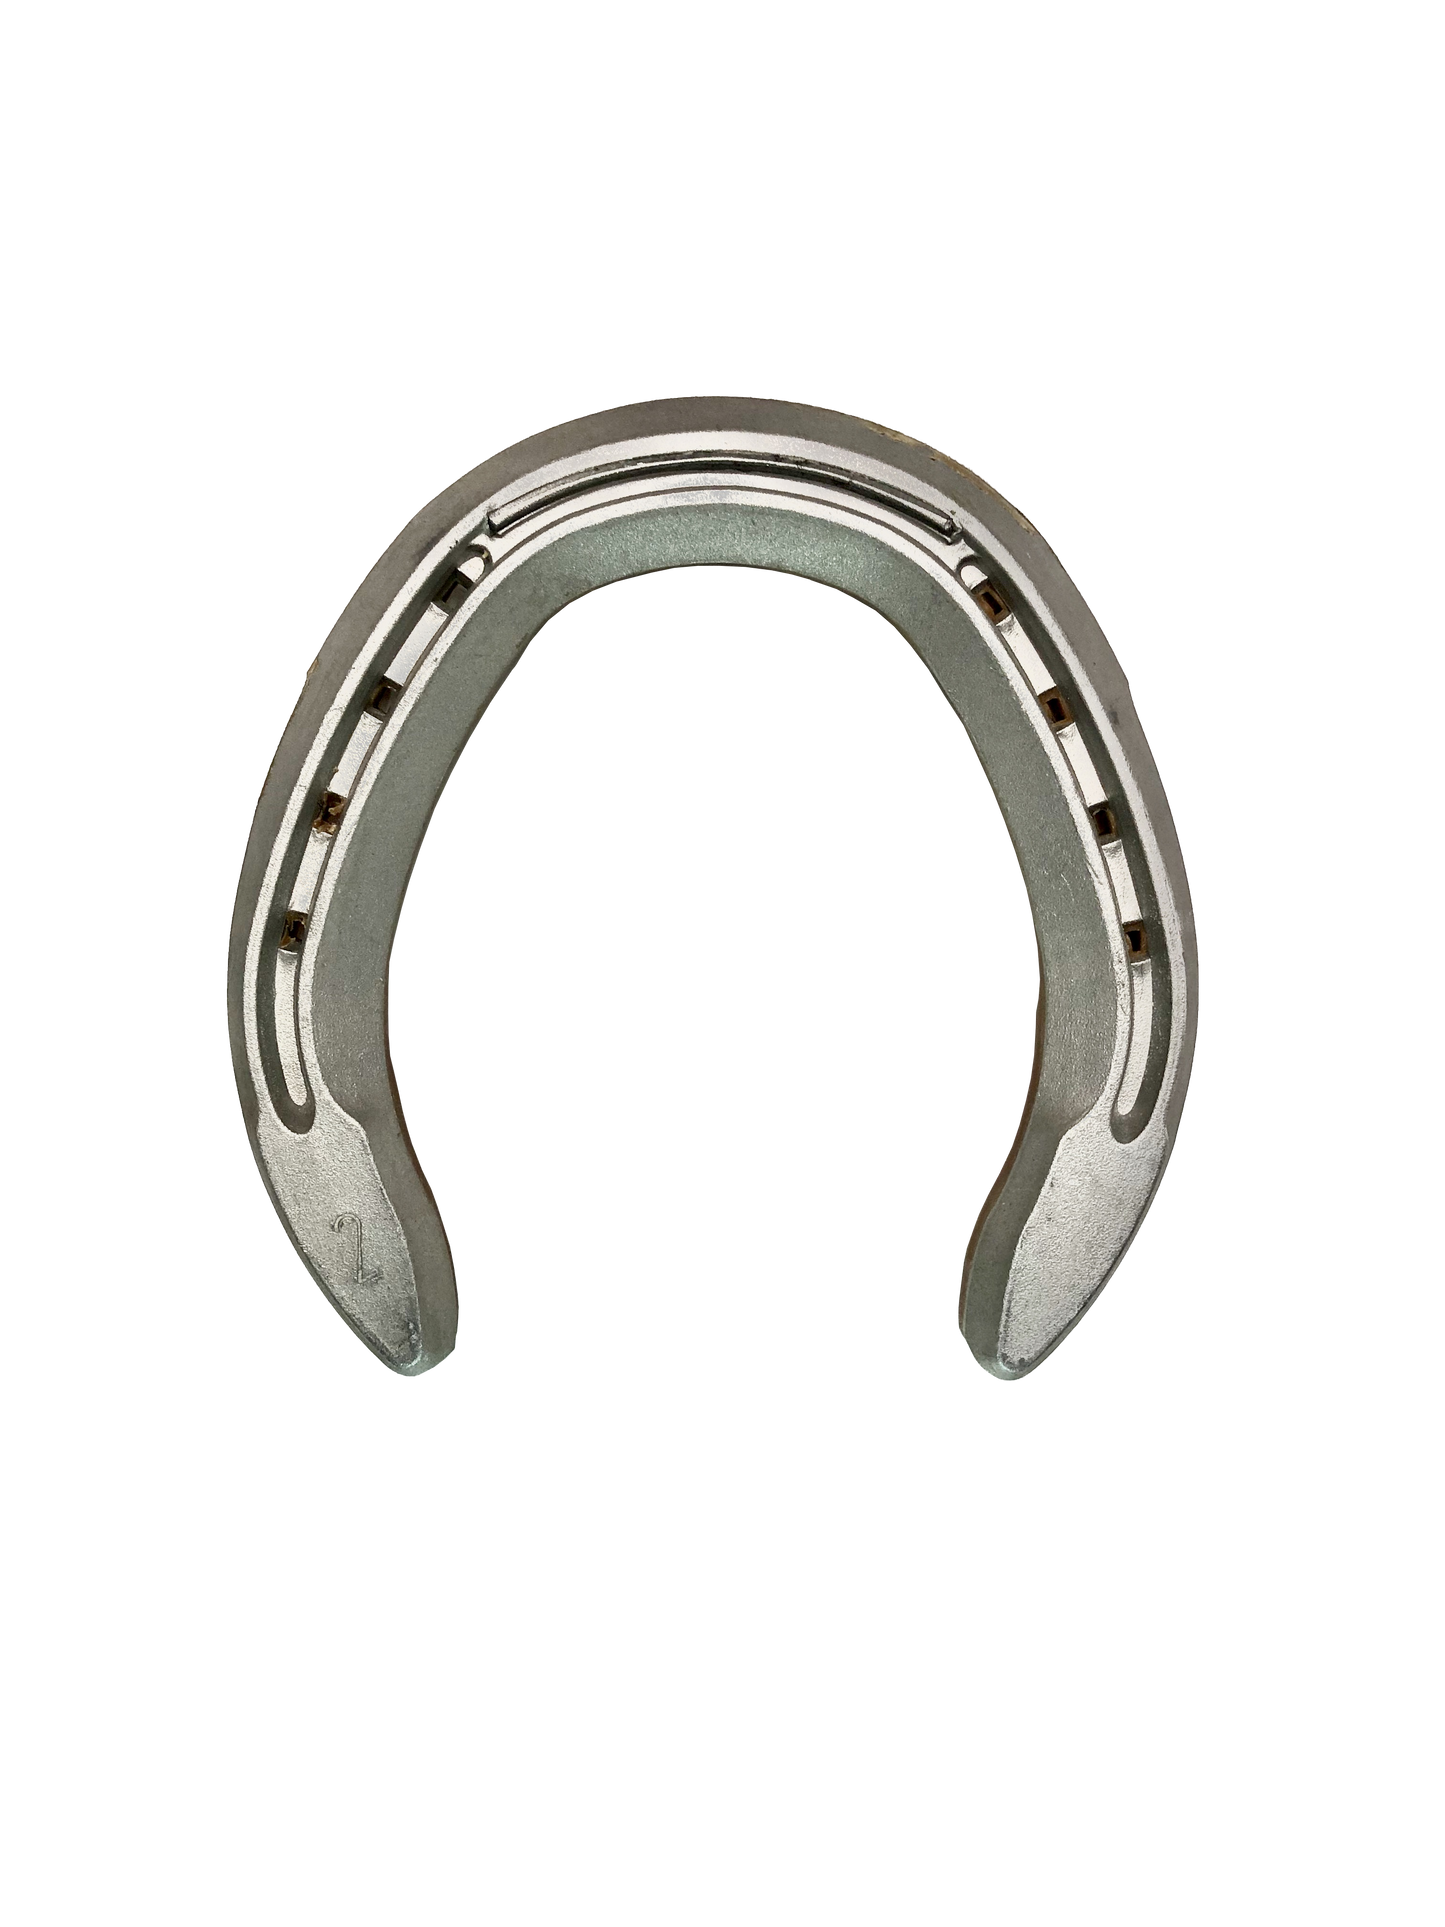 Aluminum shock absorbing horseshoes